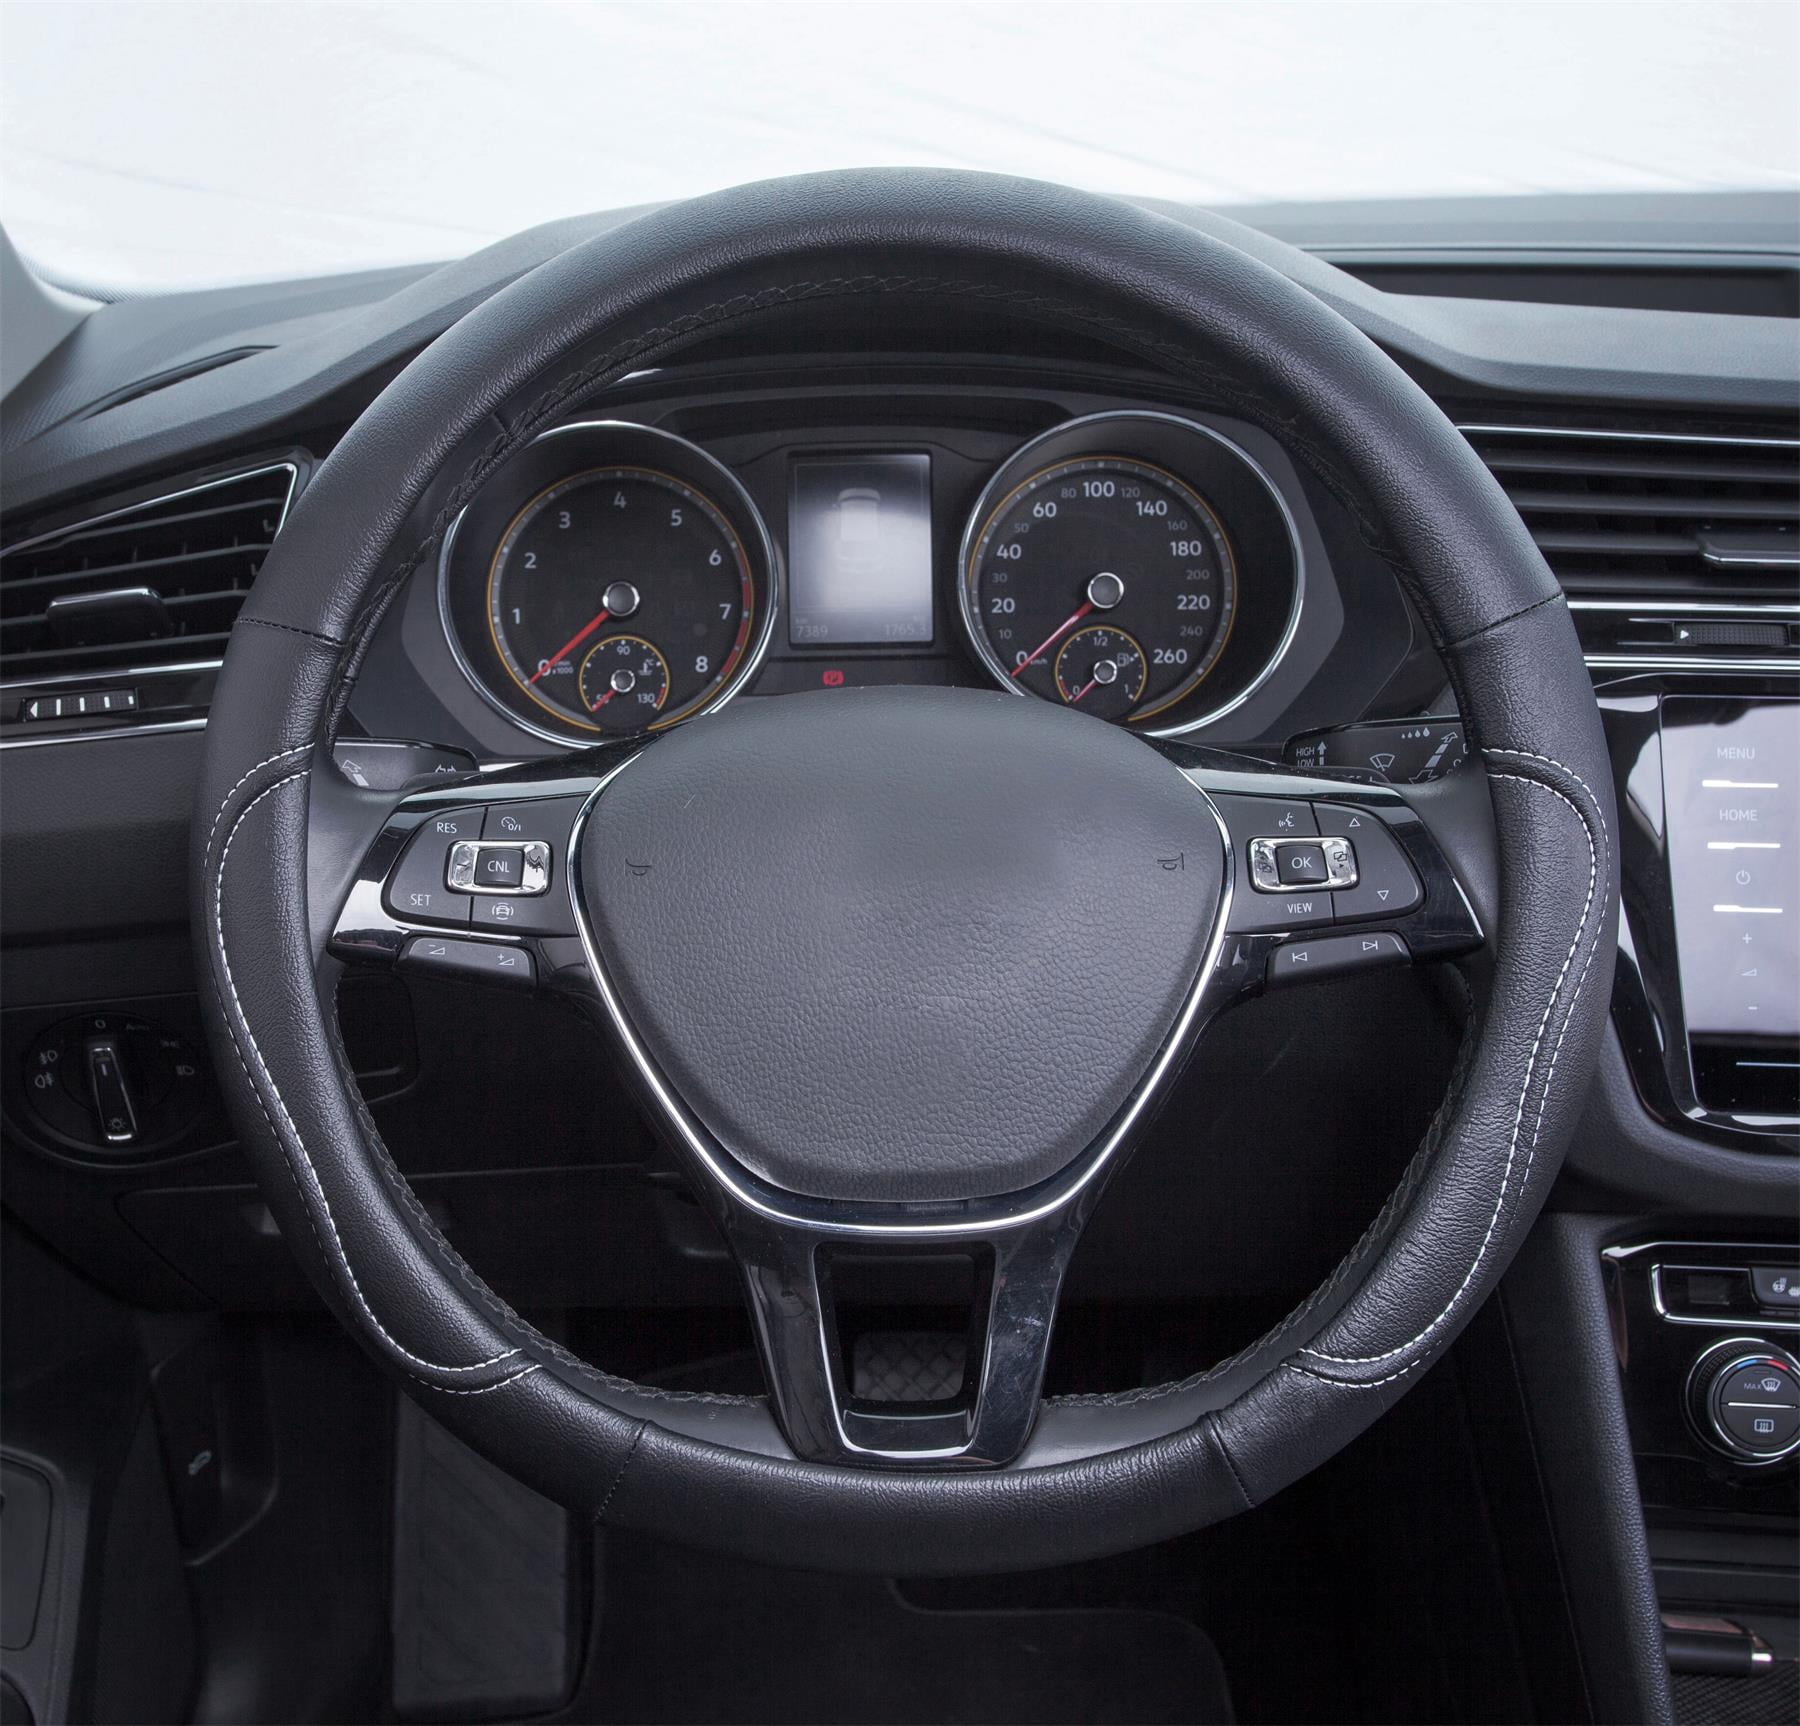 Dark Gray Black Motor Trend Sport Drive Steering Wheel Cover for Cars